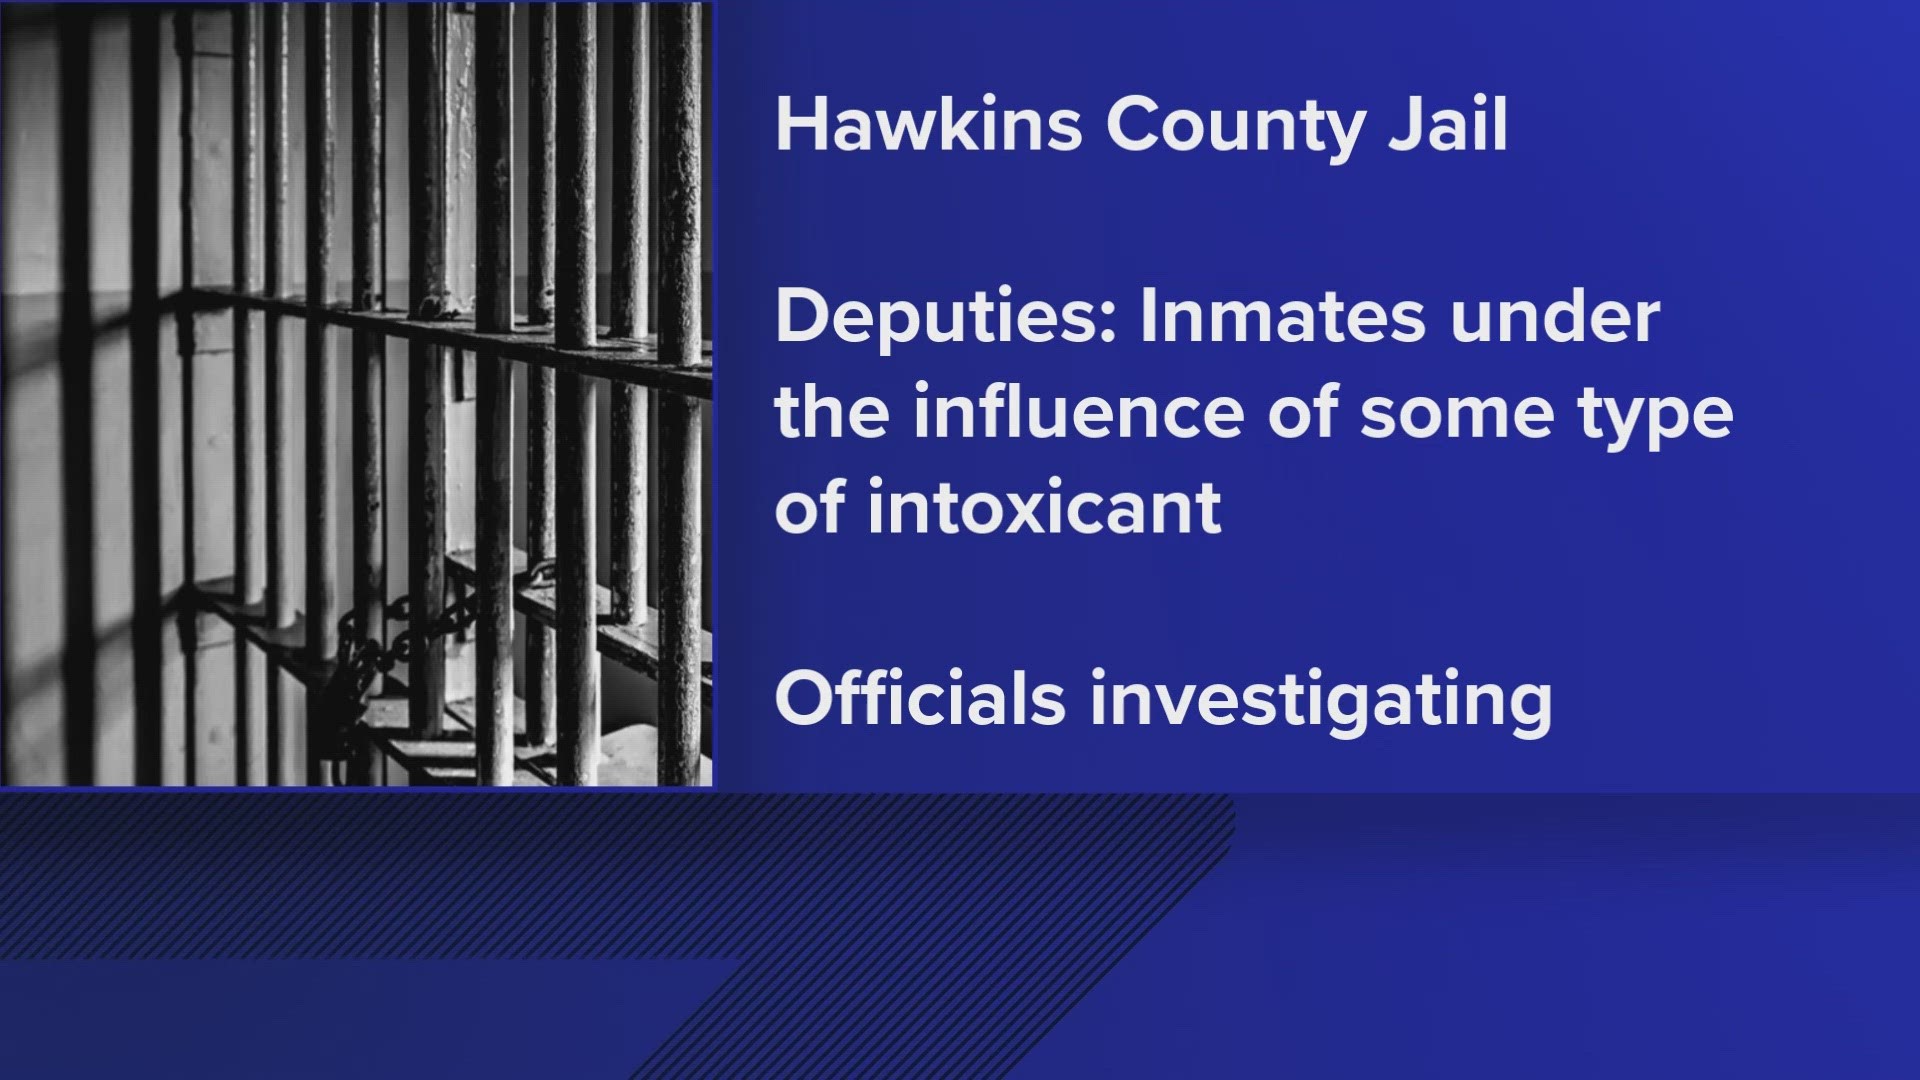 4 Hawkins County inmates taken to hospital after deputies notified of